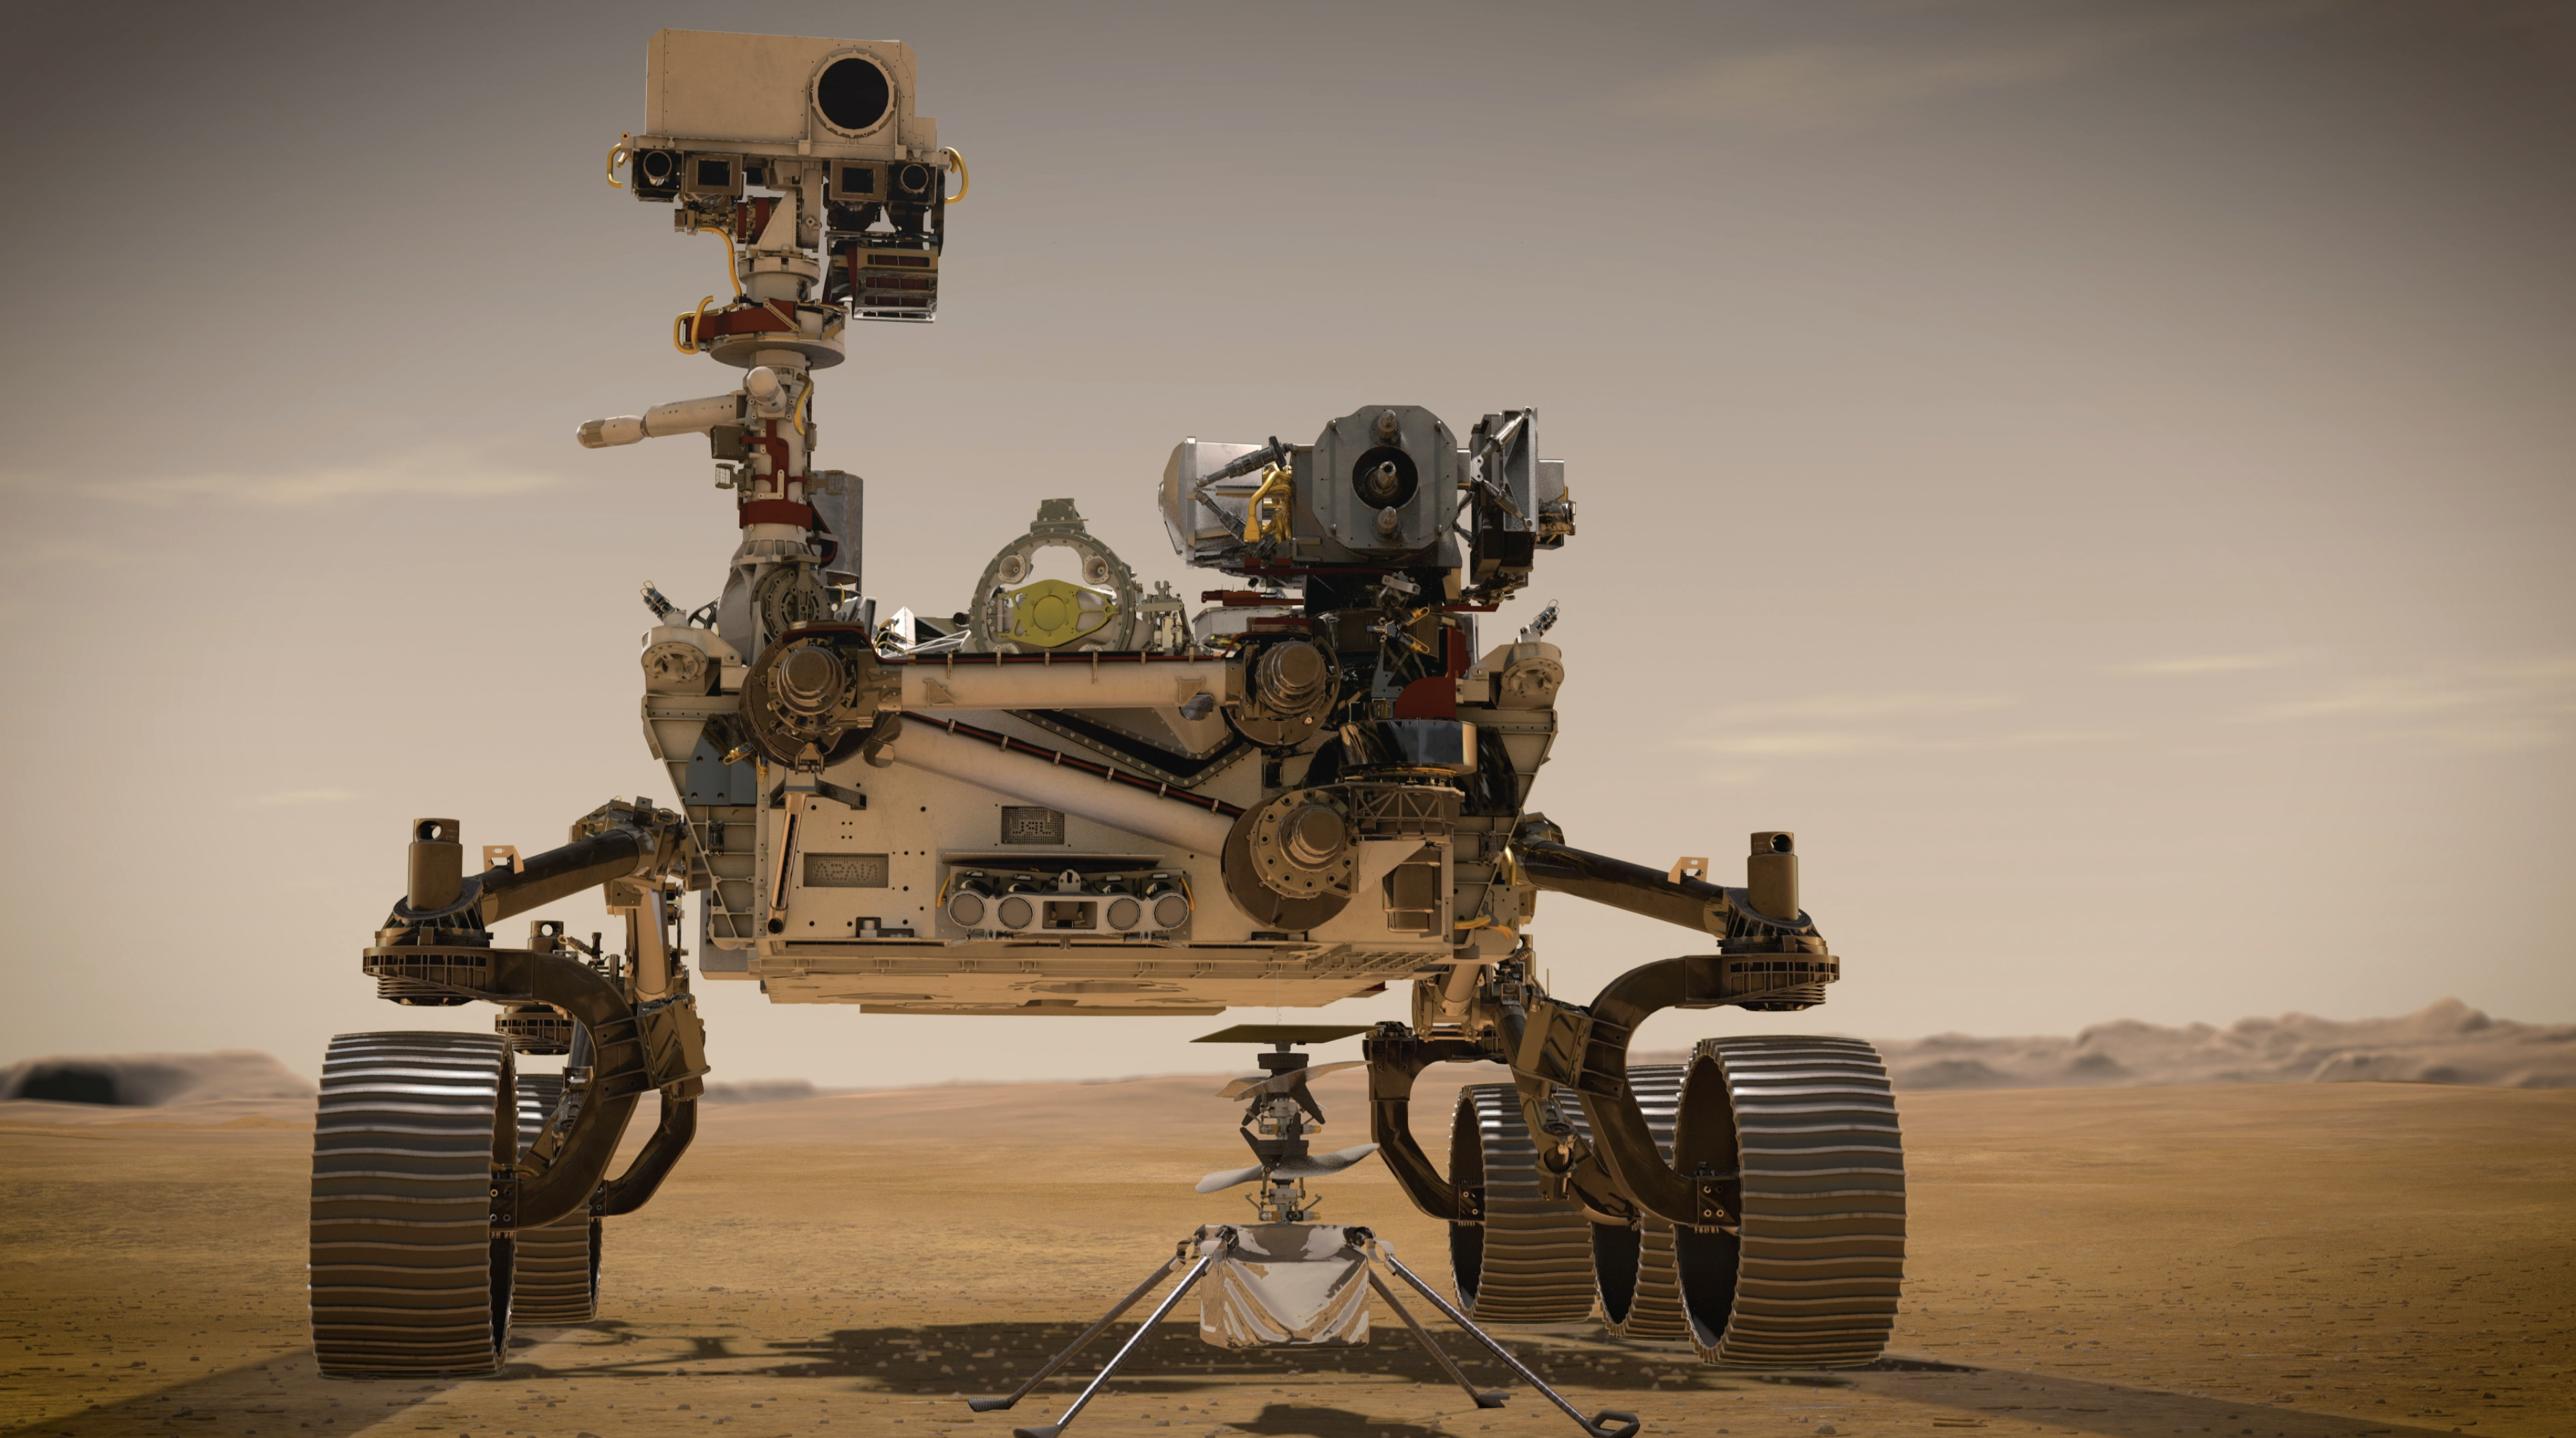 2020 Rover Perseverance (image from NASA)